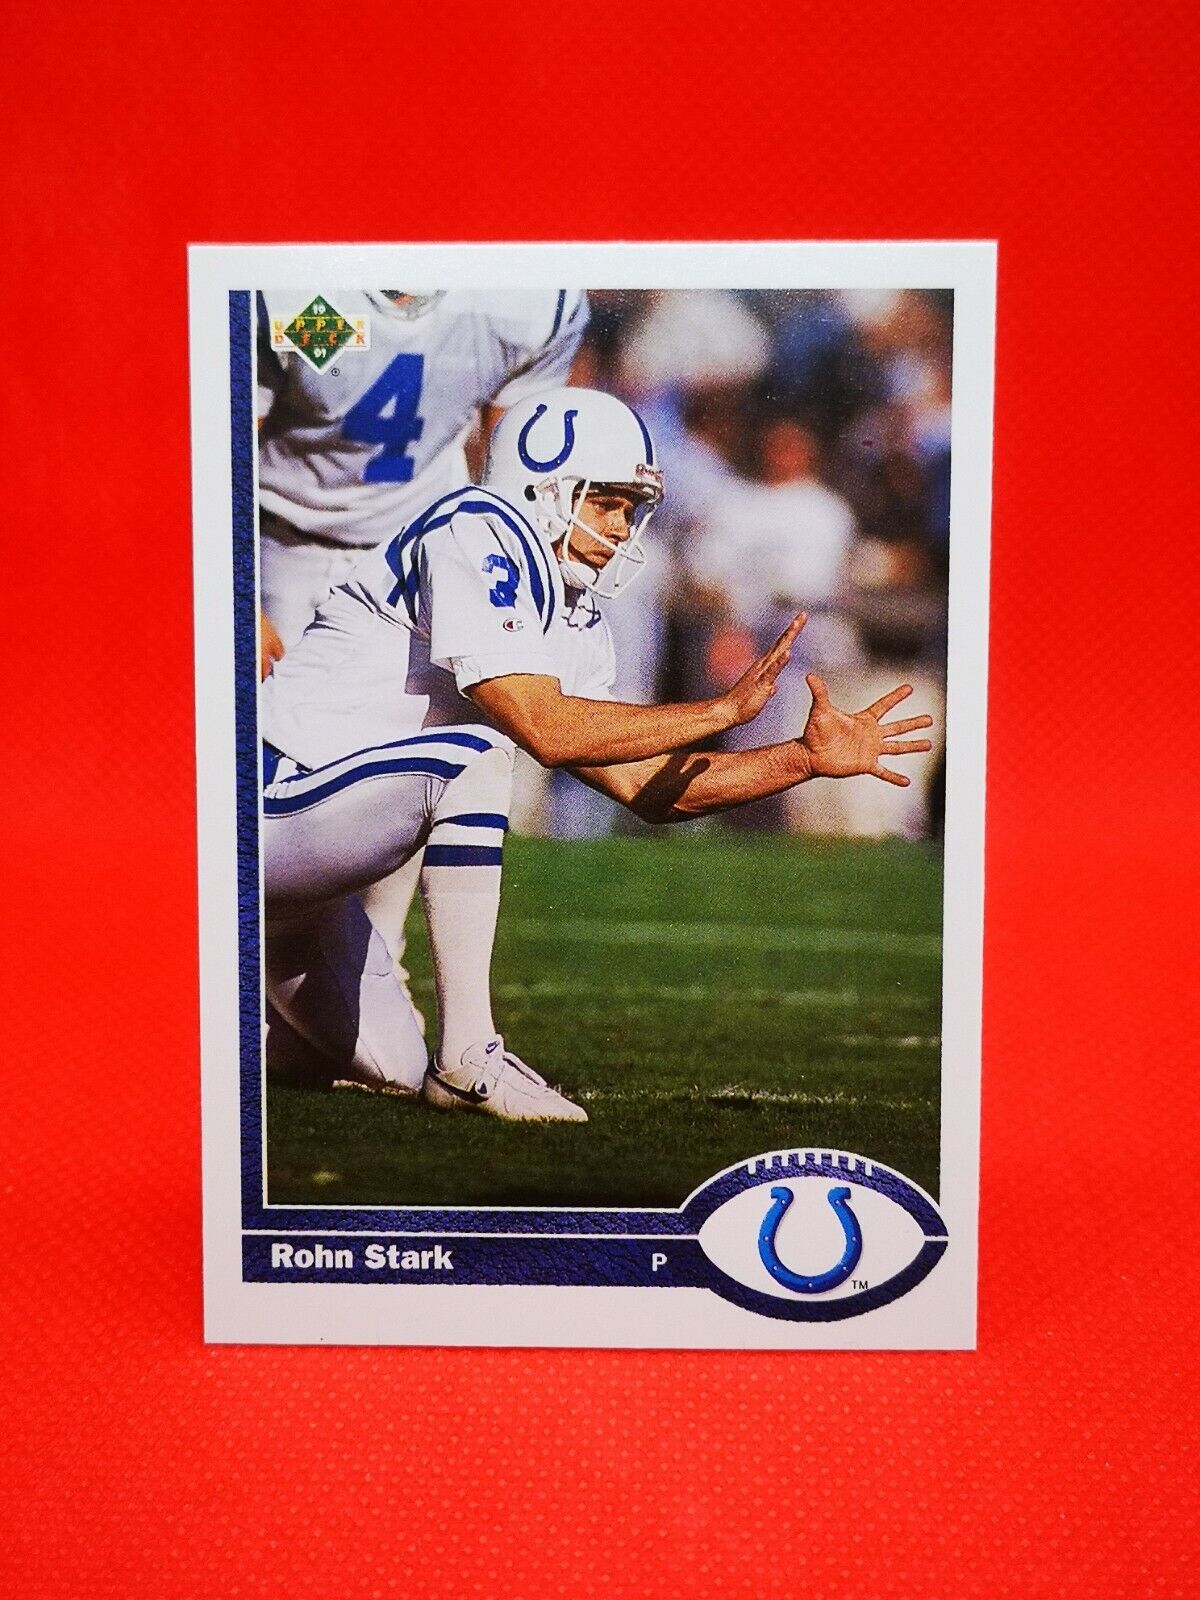 1991 Upper Deck NFL Football Card NM+/M Indianapolis Colts #197 Rohn Stark